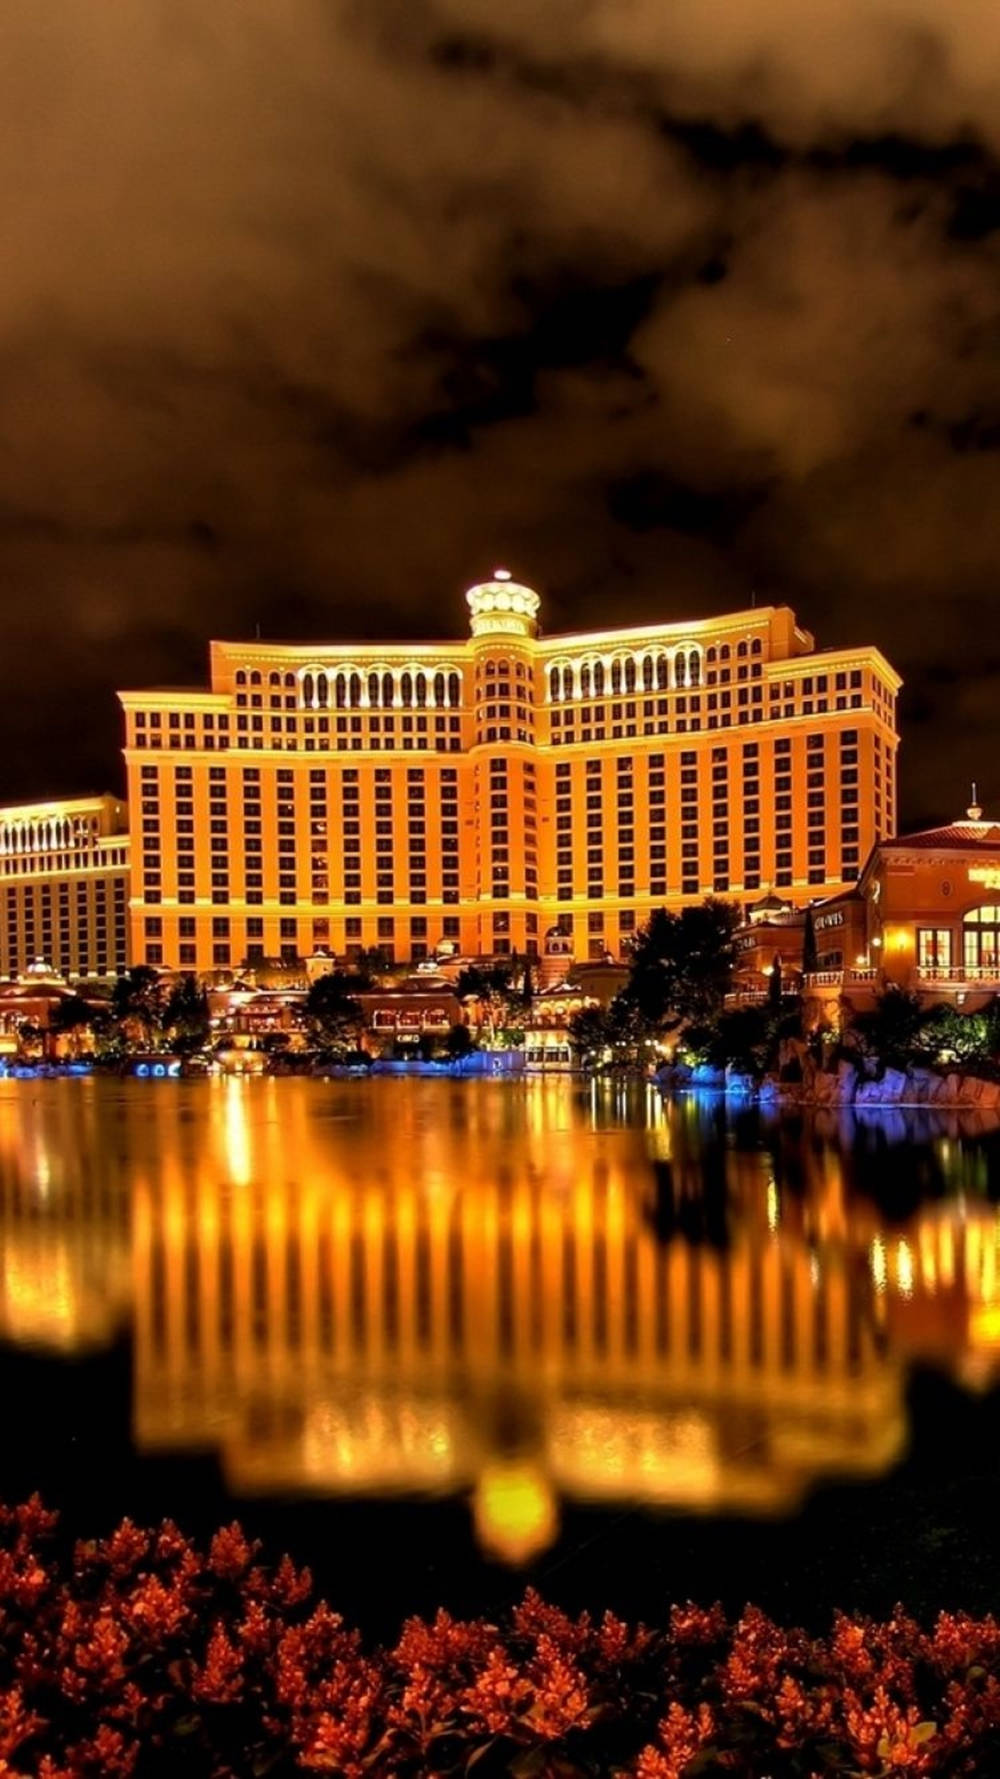 Vegas Bellagio Hotel And Casino Iphone Wallpaper